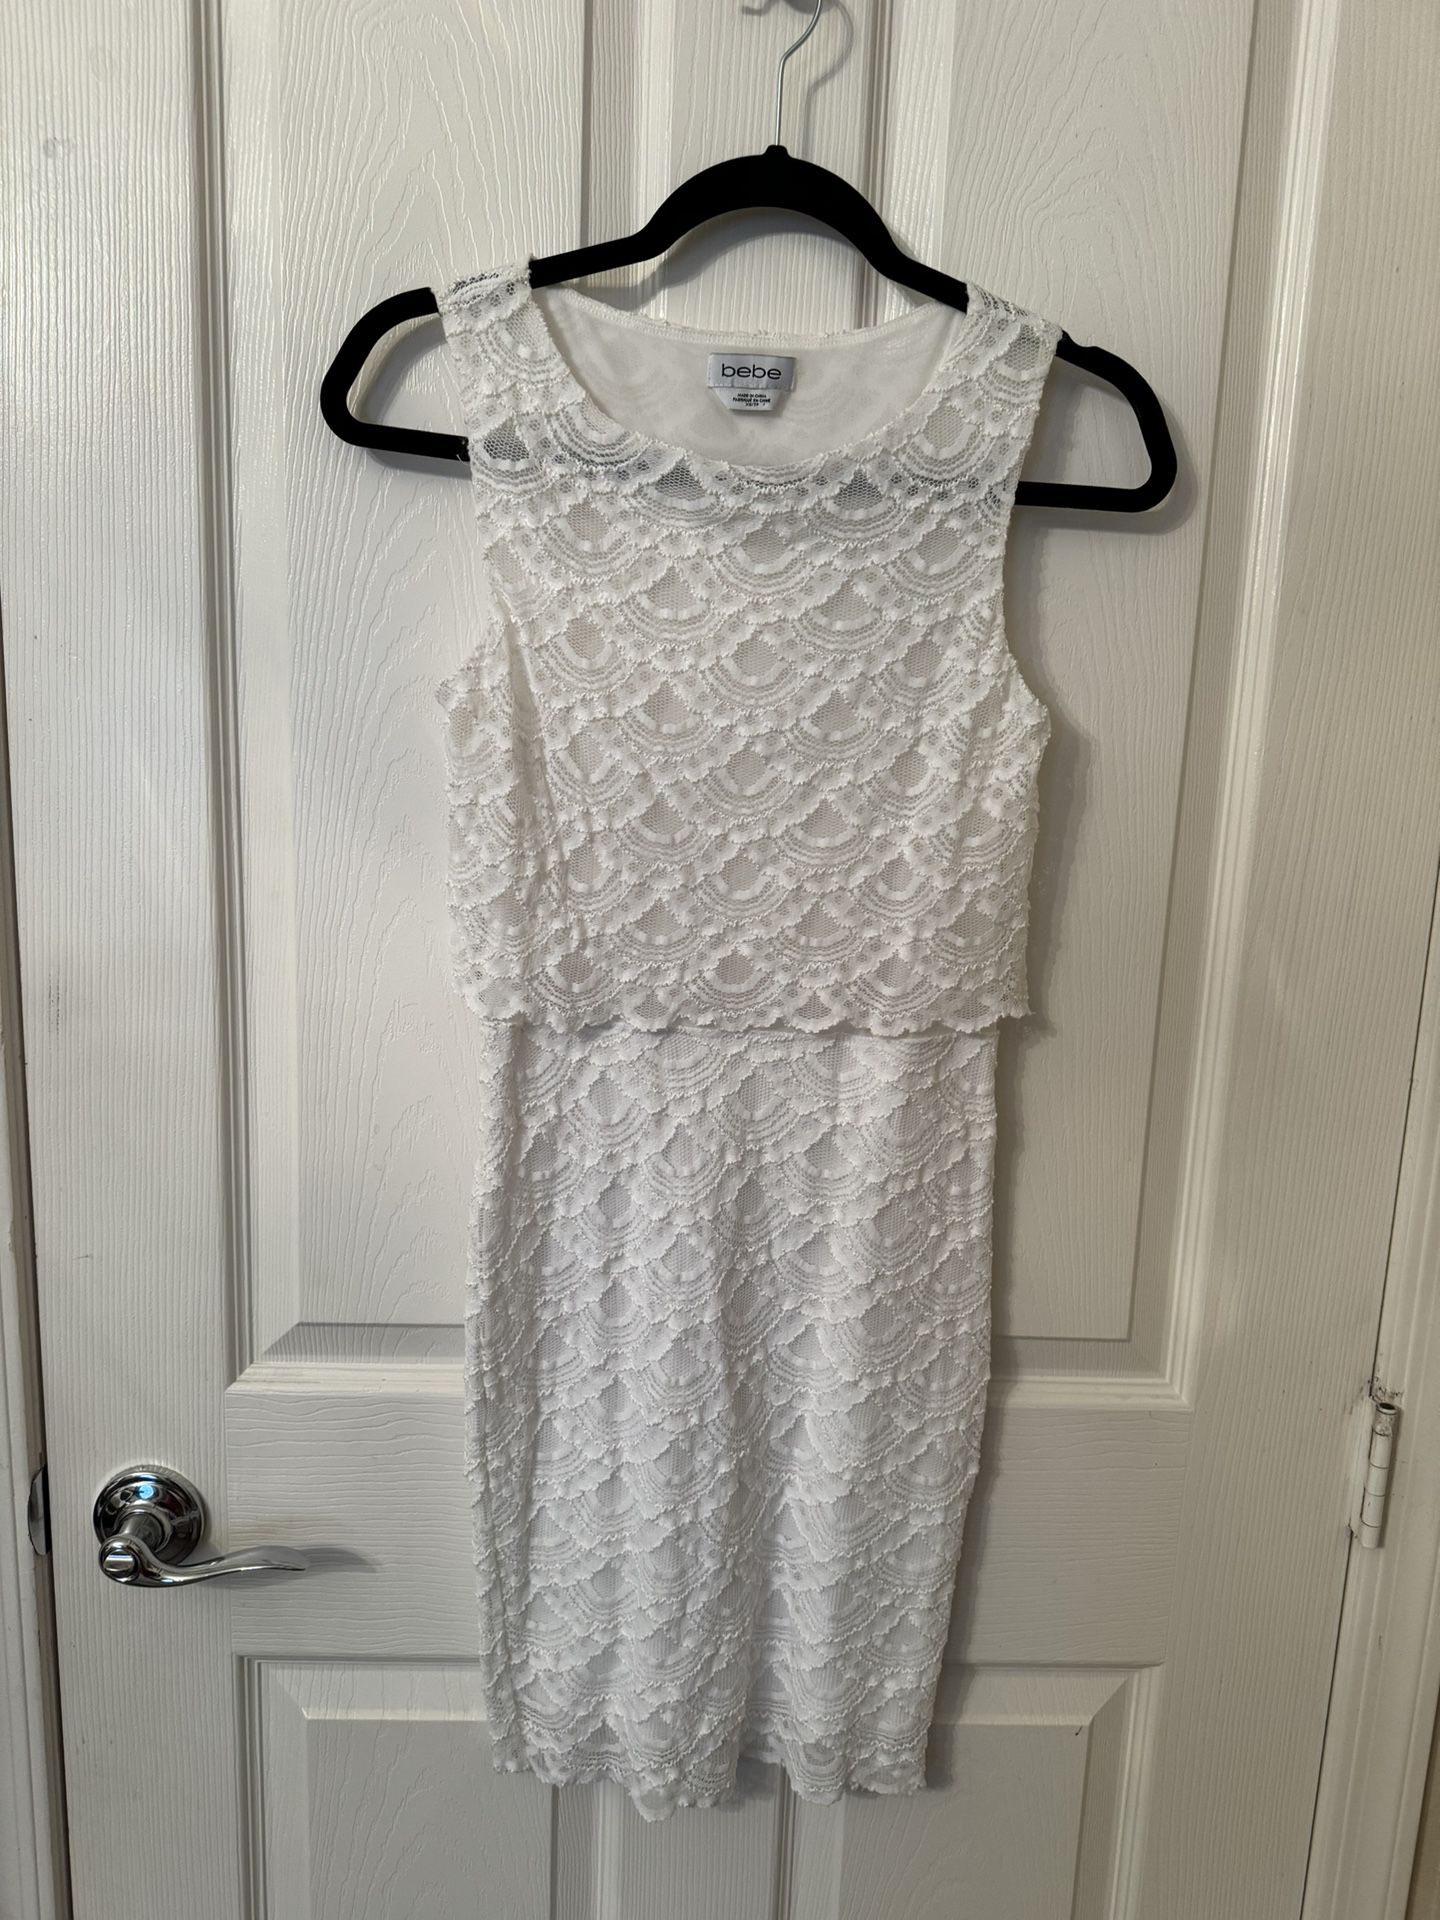 White Lace Dress $10